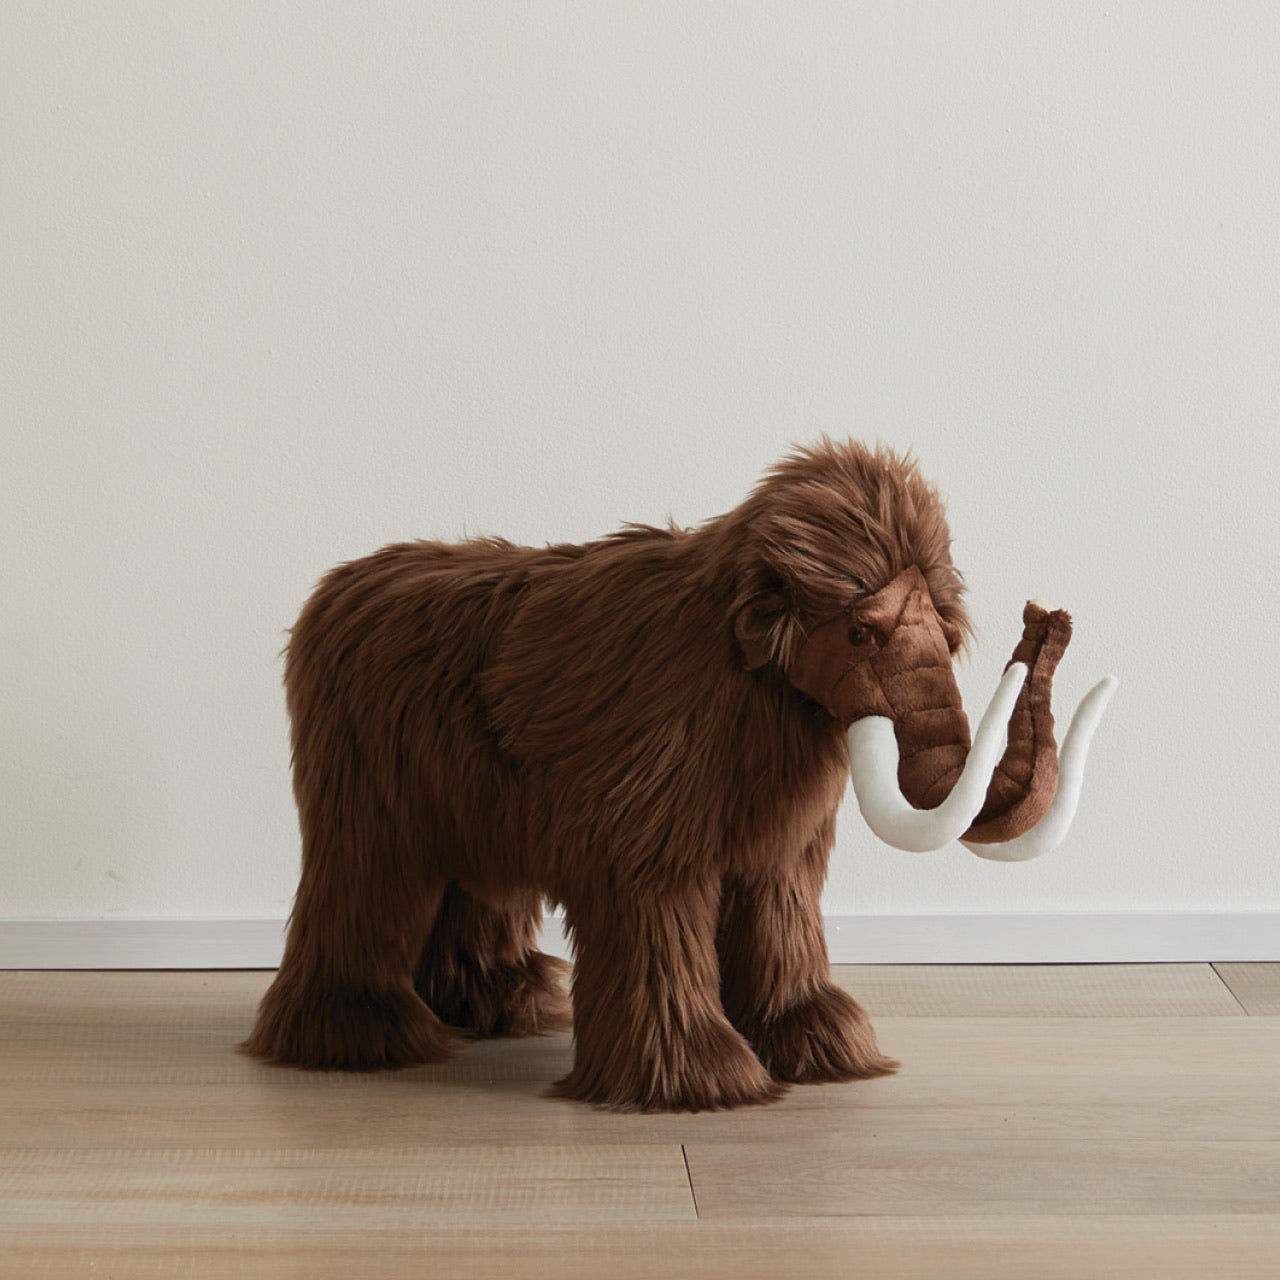 Mammoth Standing Animal standing on floor